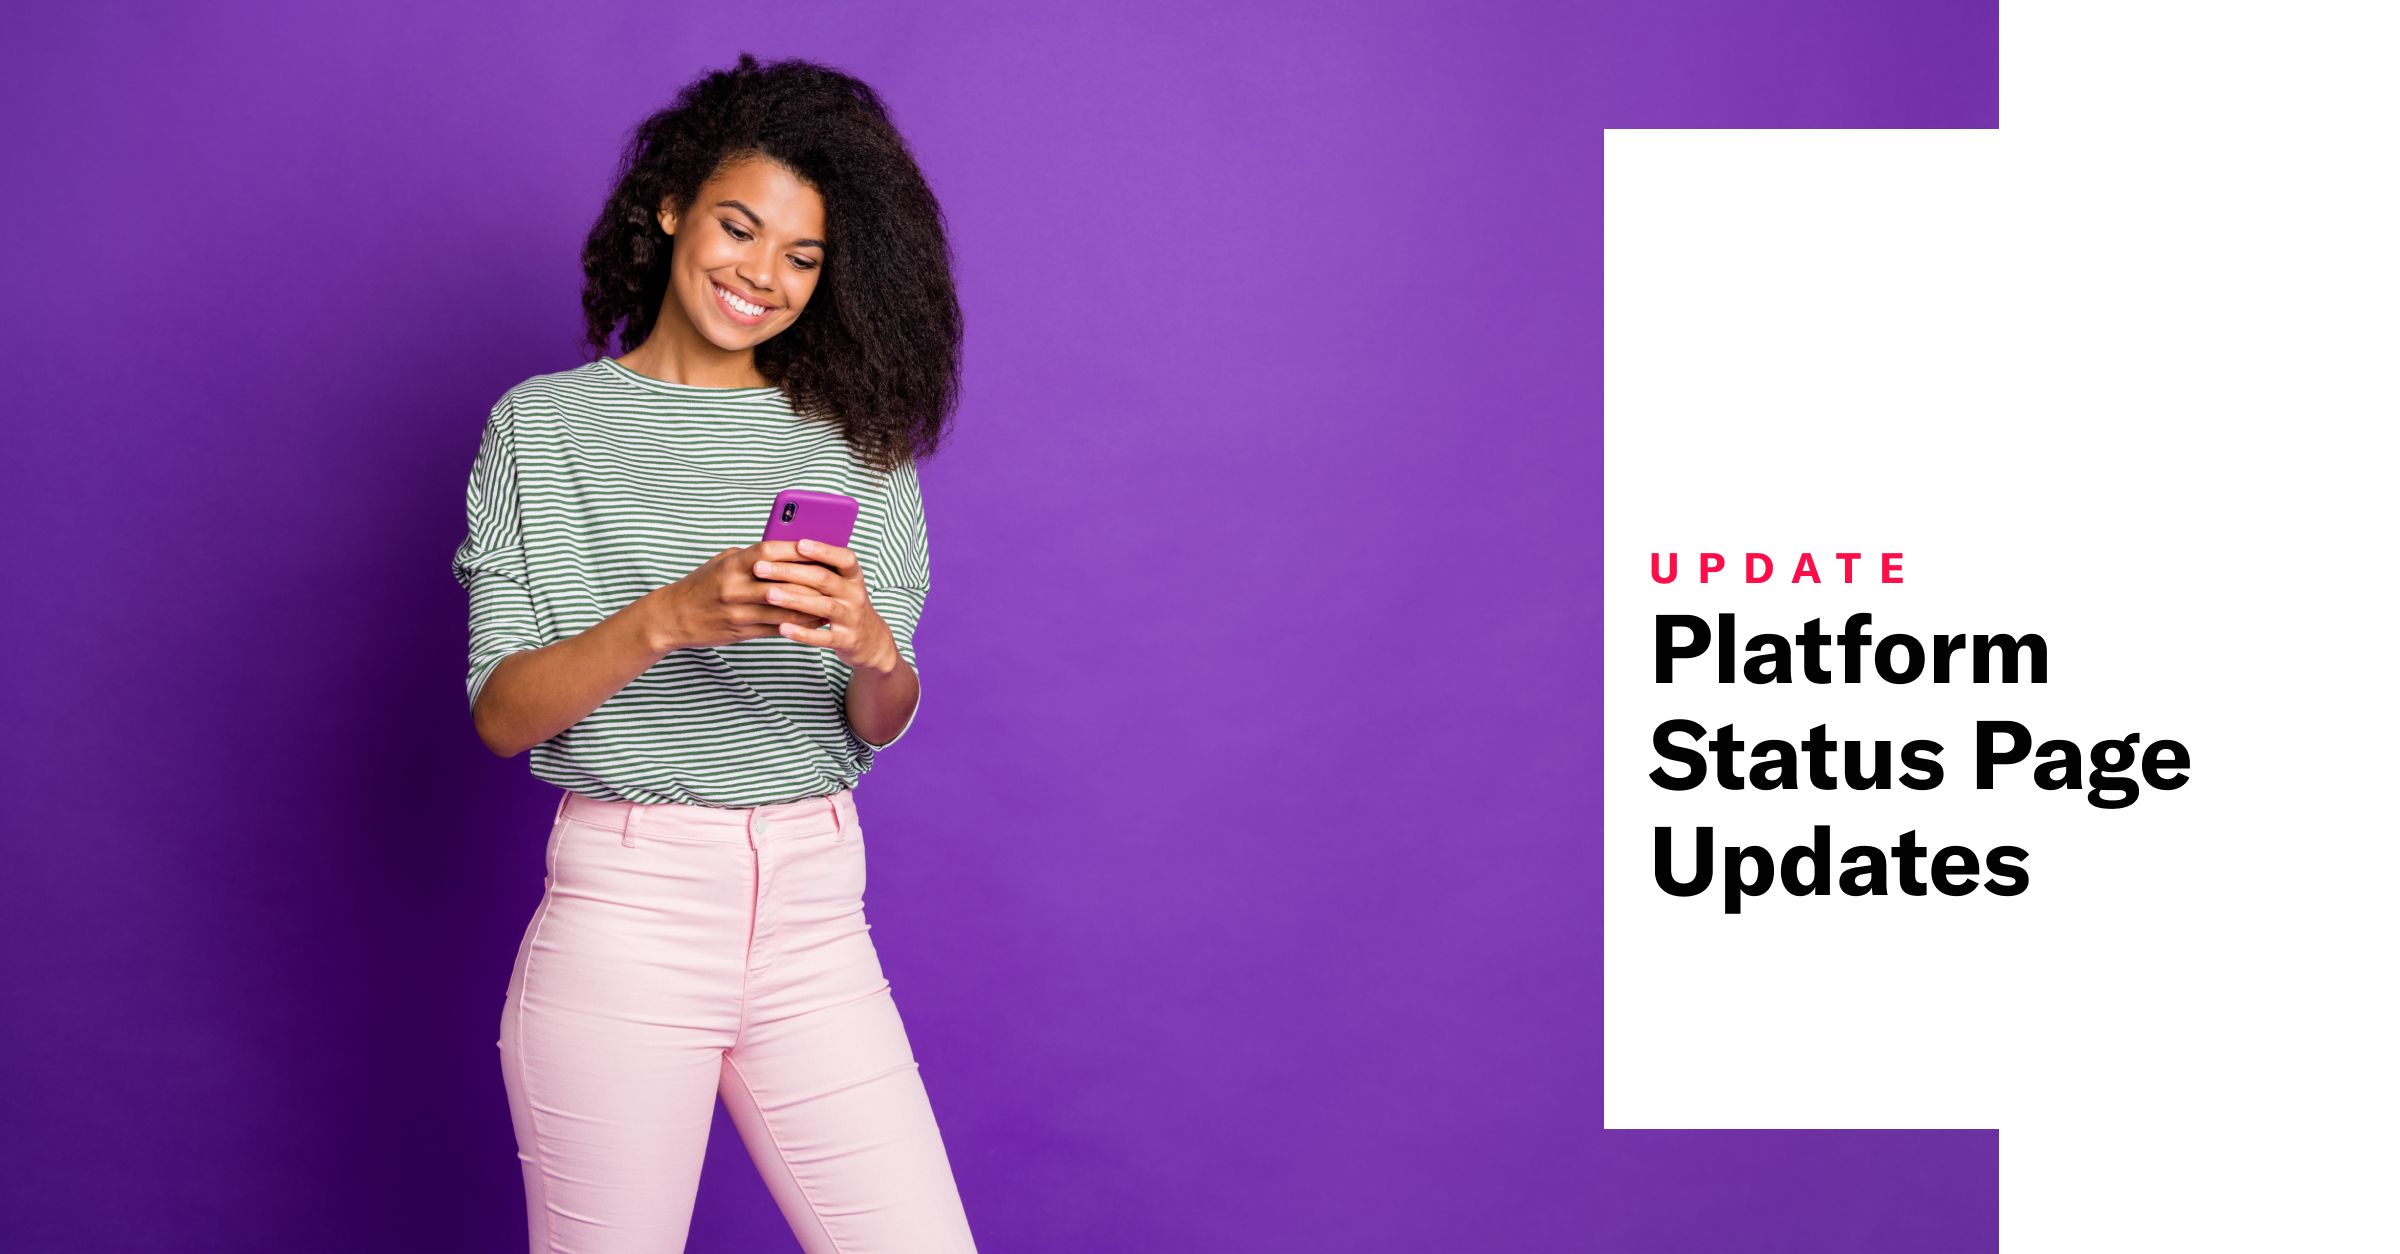 Platform Status Page Updates